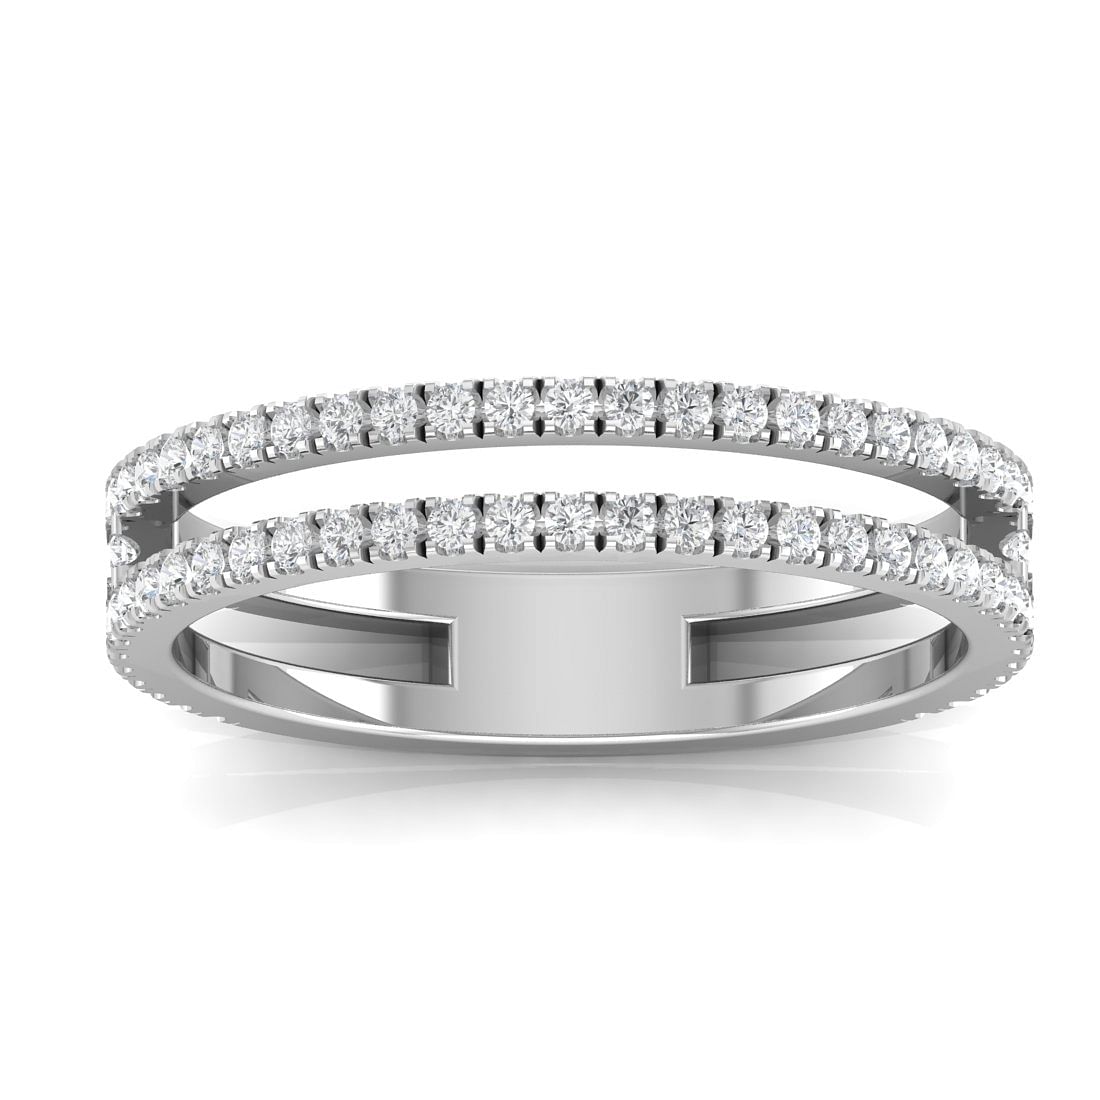 Dual Layer White Yellow Diamond Ring For Women